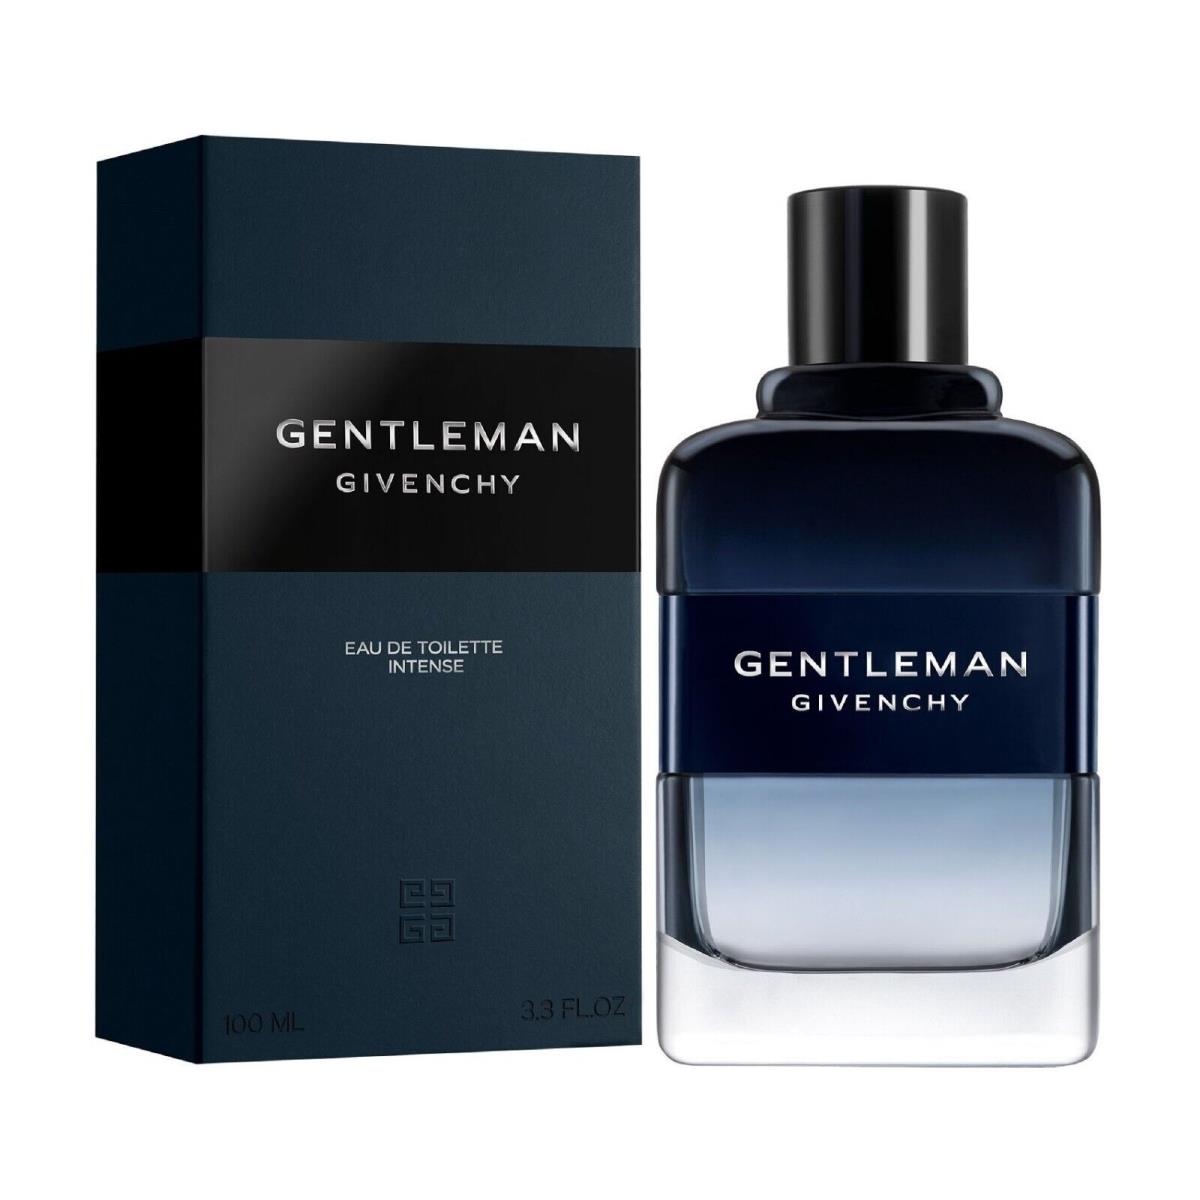 Gentlemen Givenchy by Givenchy Intense For Men Edt 3.3 FL OZ / 100 ML Spray